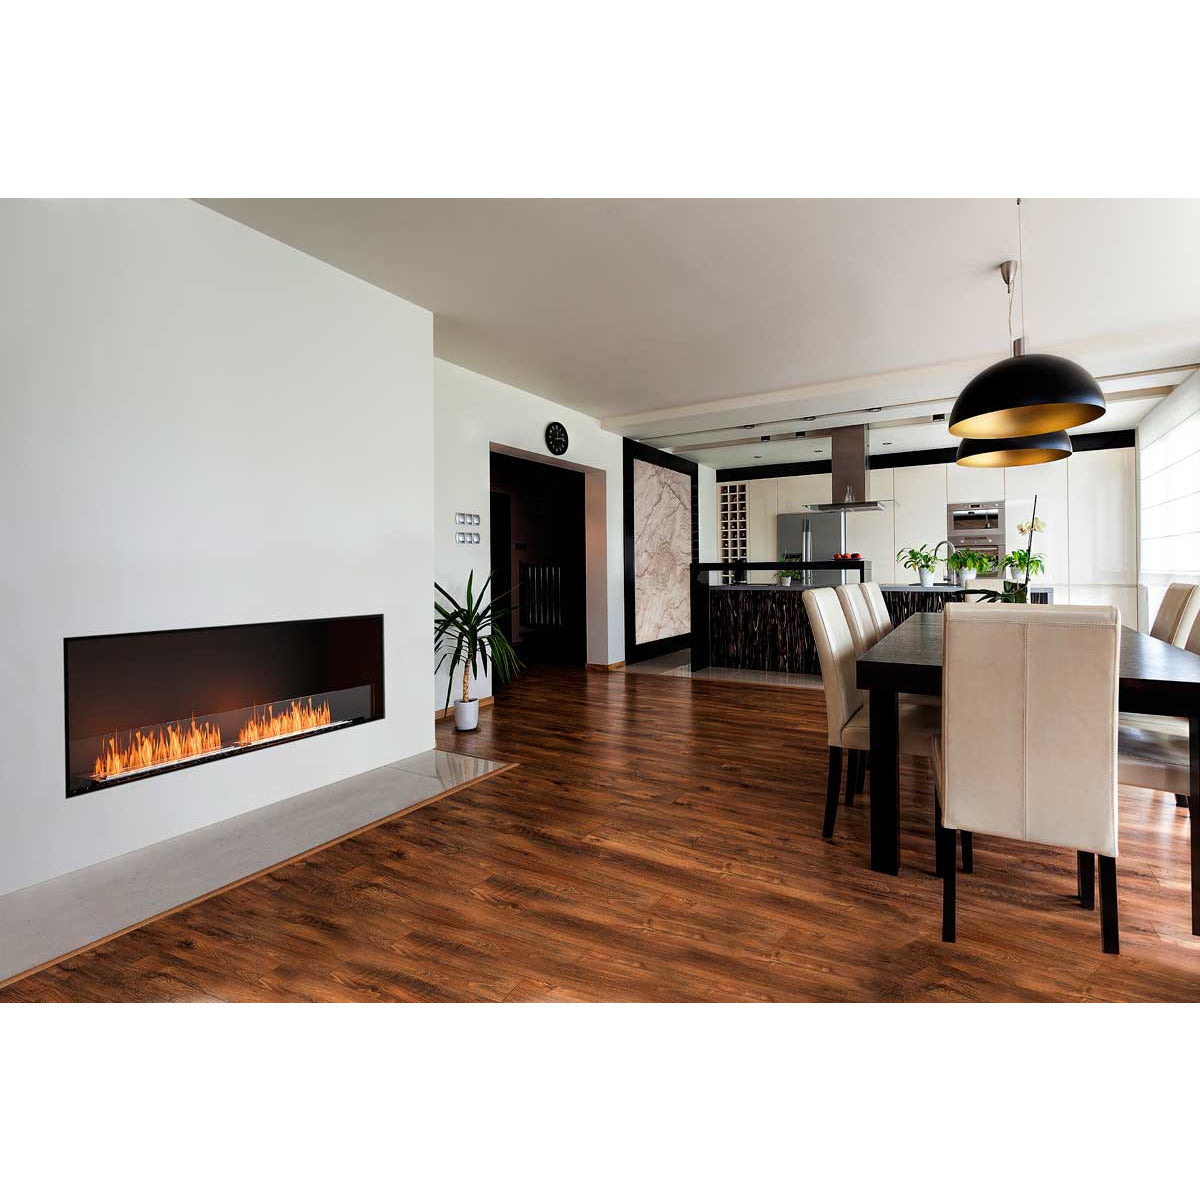 EcoSmart Flex 86ss; best modern, bio ethanol fireplace in black - 94.1 inches long wall fireplace for sale